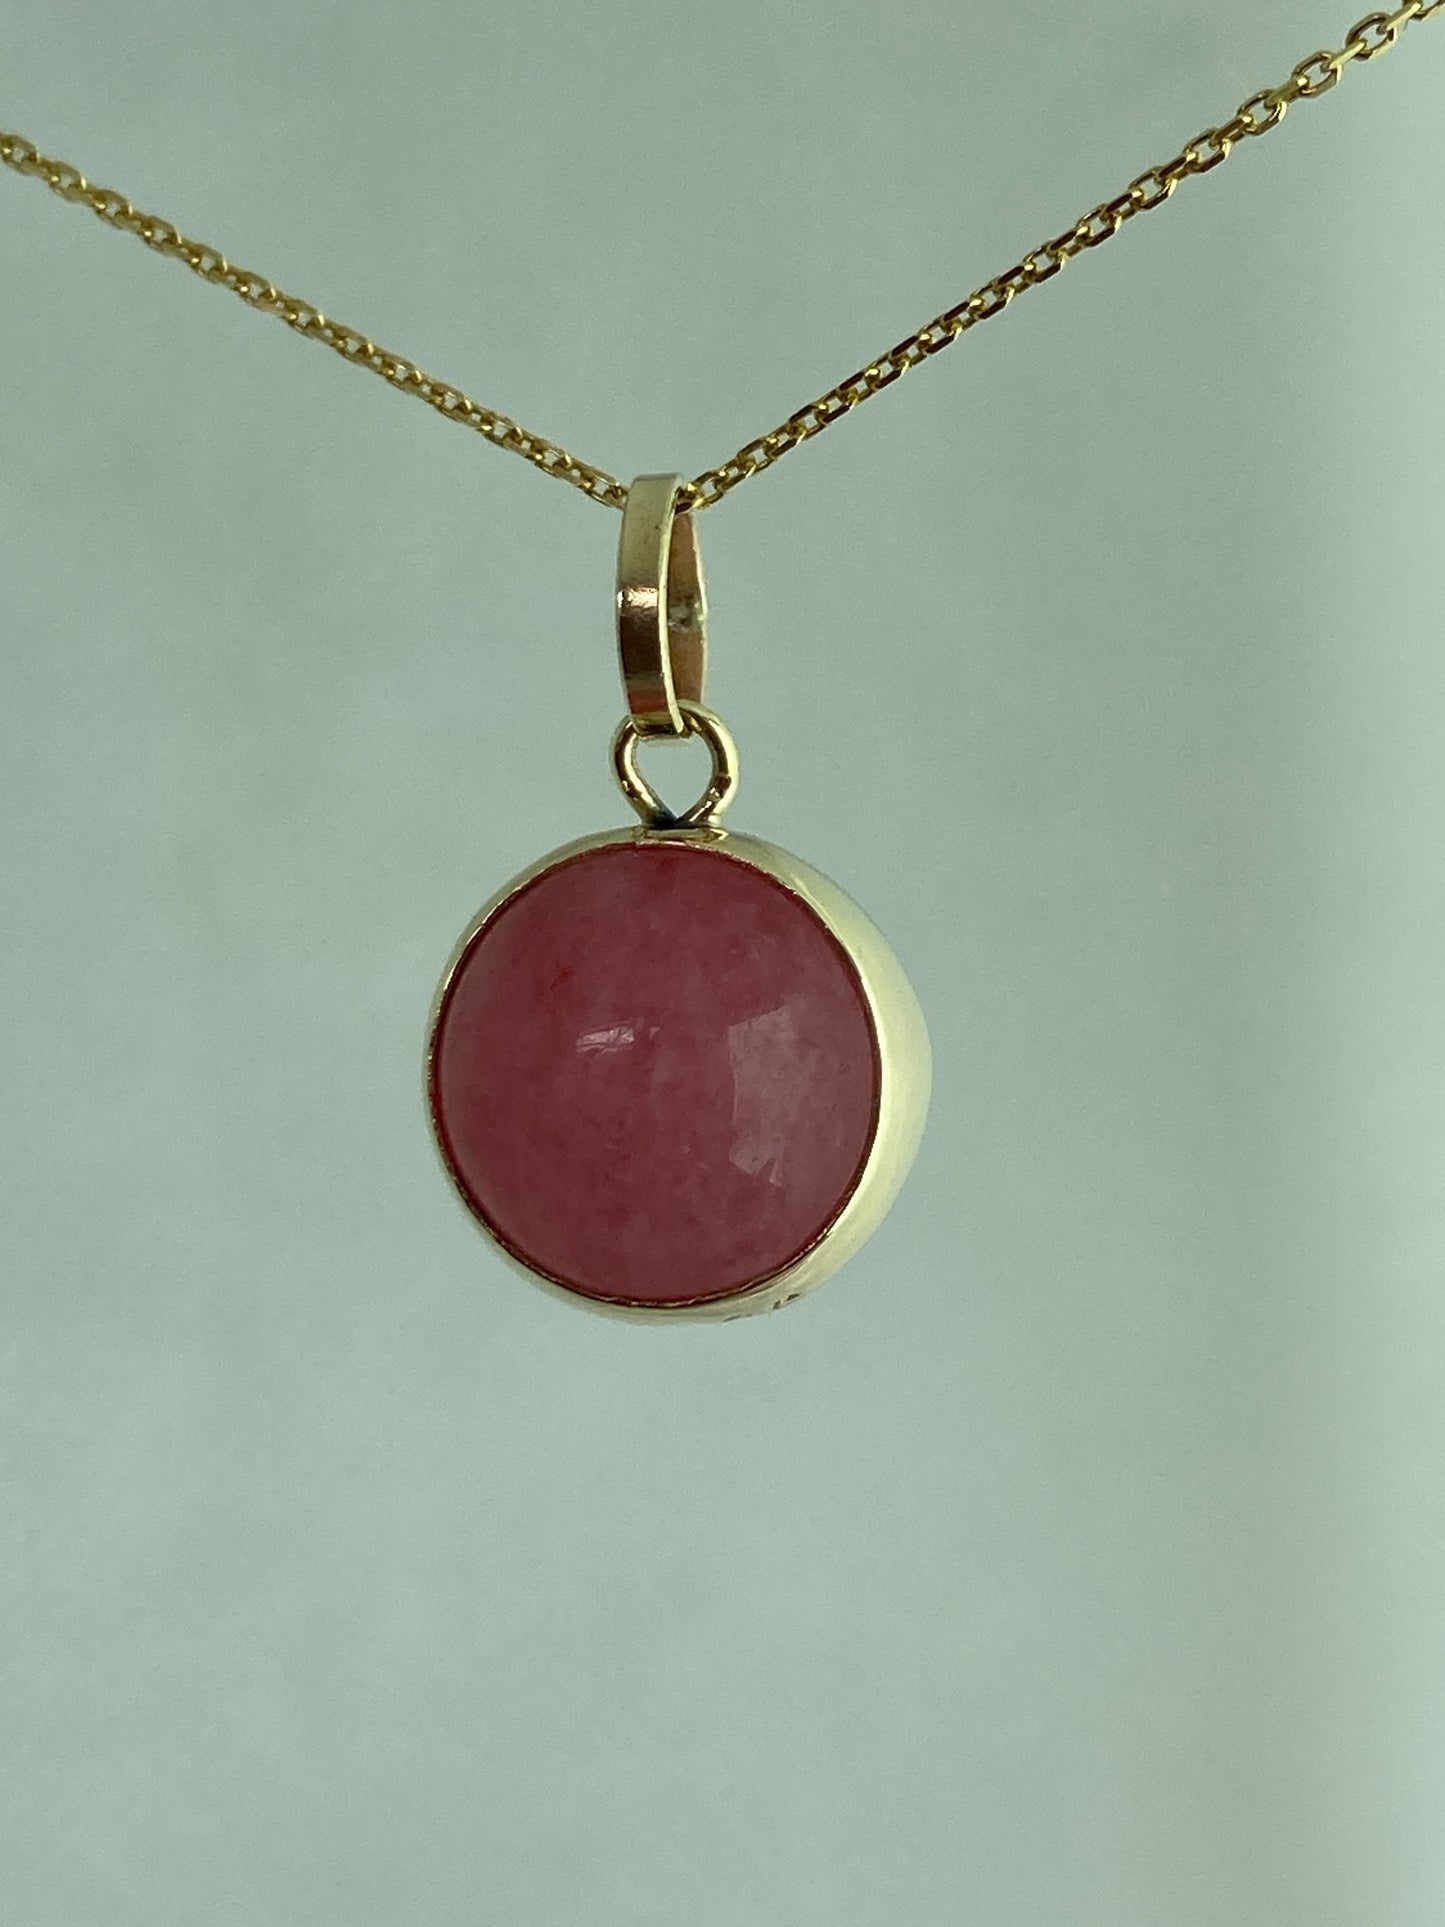 9ct gold pink Jade pendant, 18” chain